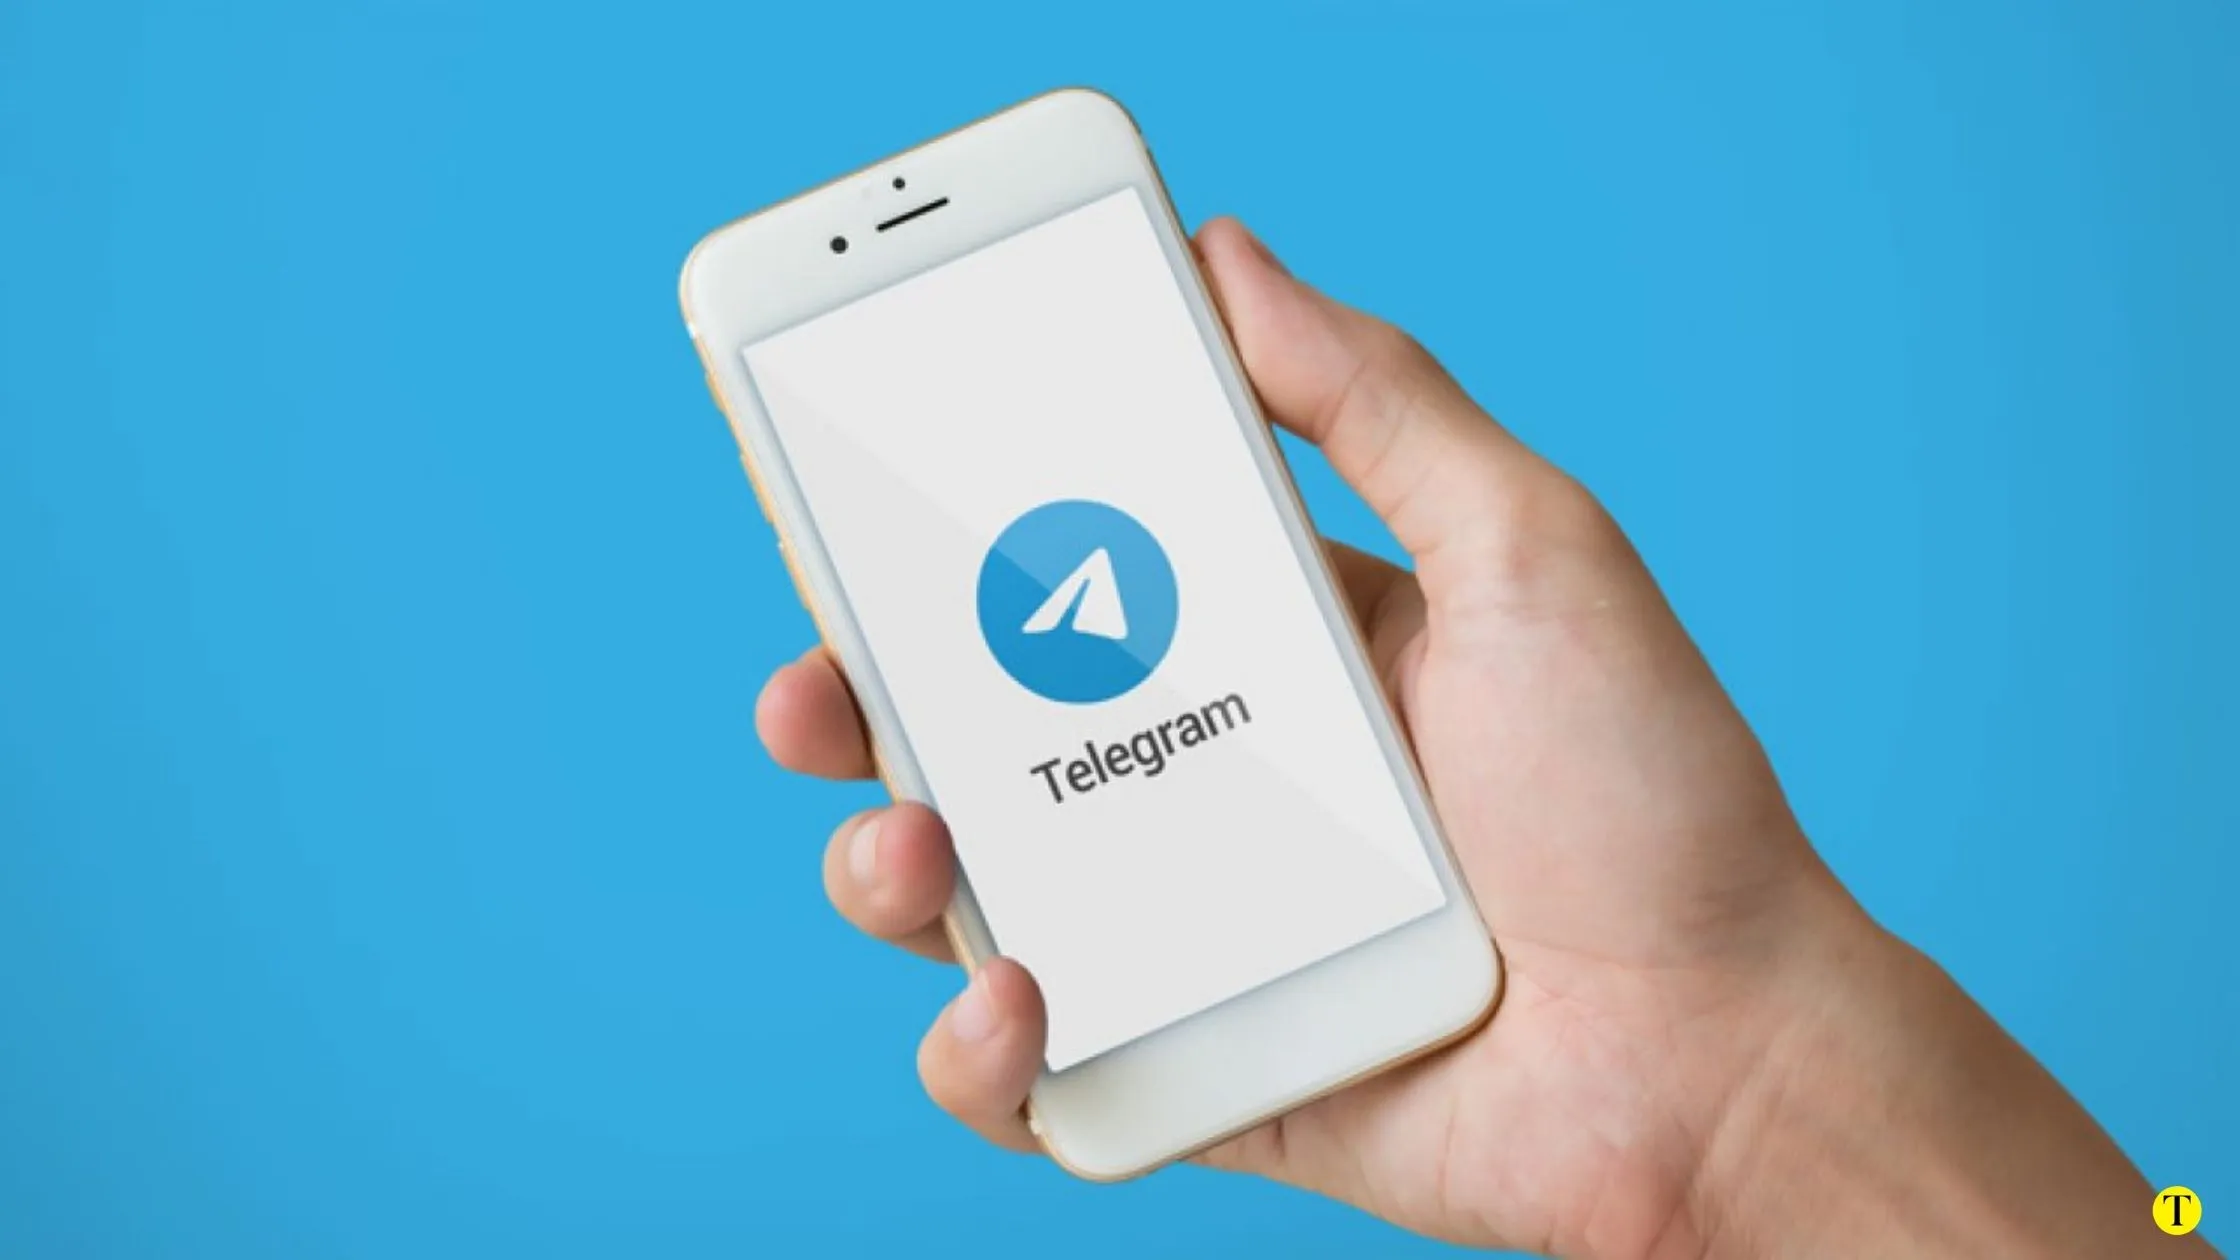 WP Telegram: Vincula tu canal con WordPress para difundir tu contenido fácilmente